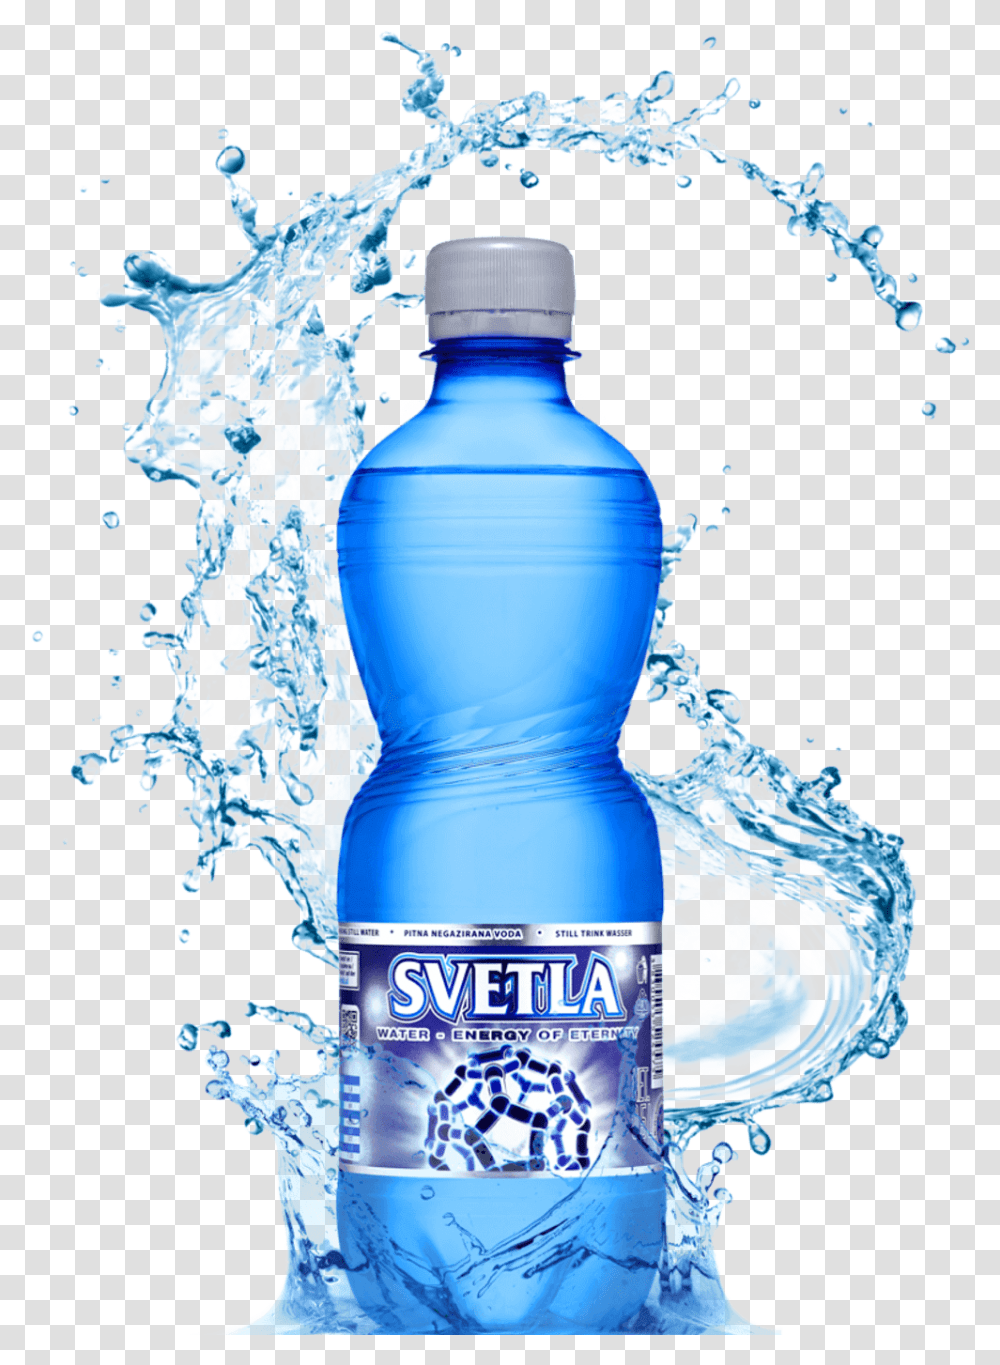 Bottle Water Picture Background Water Splash, Mineral Water, Beverage, Water Bottle, Drink Transparent Png